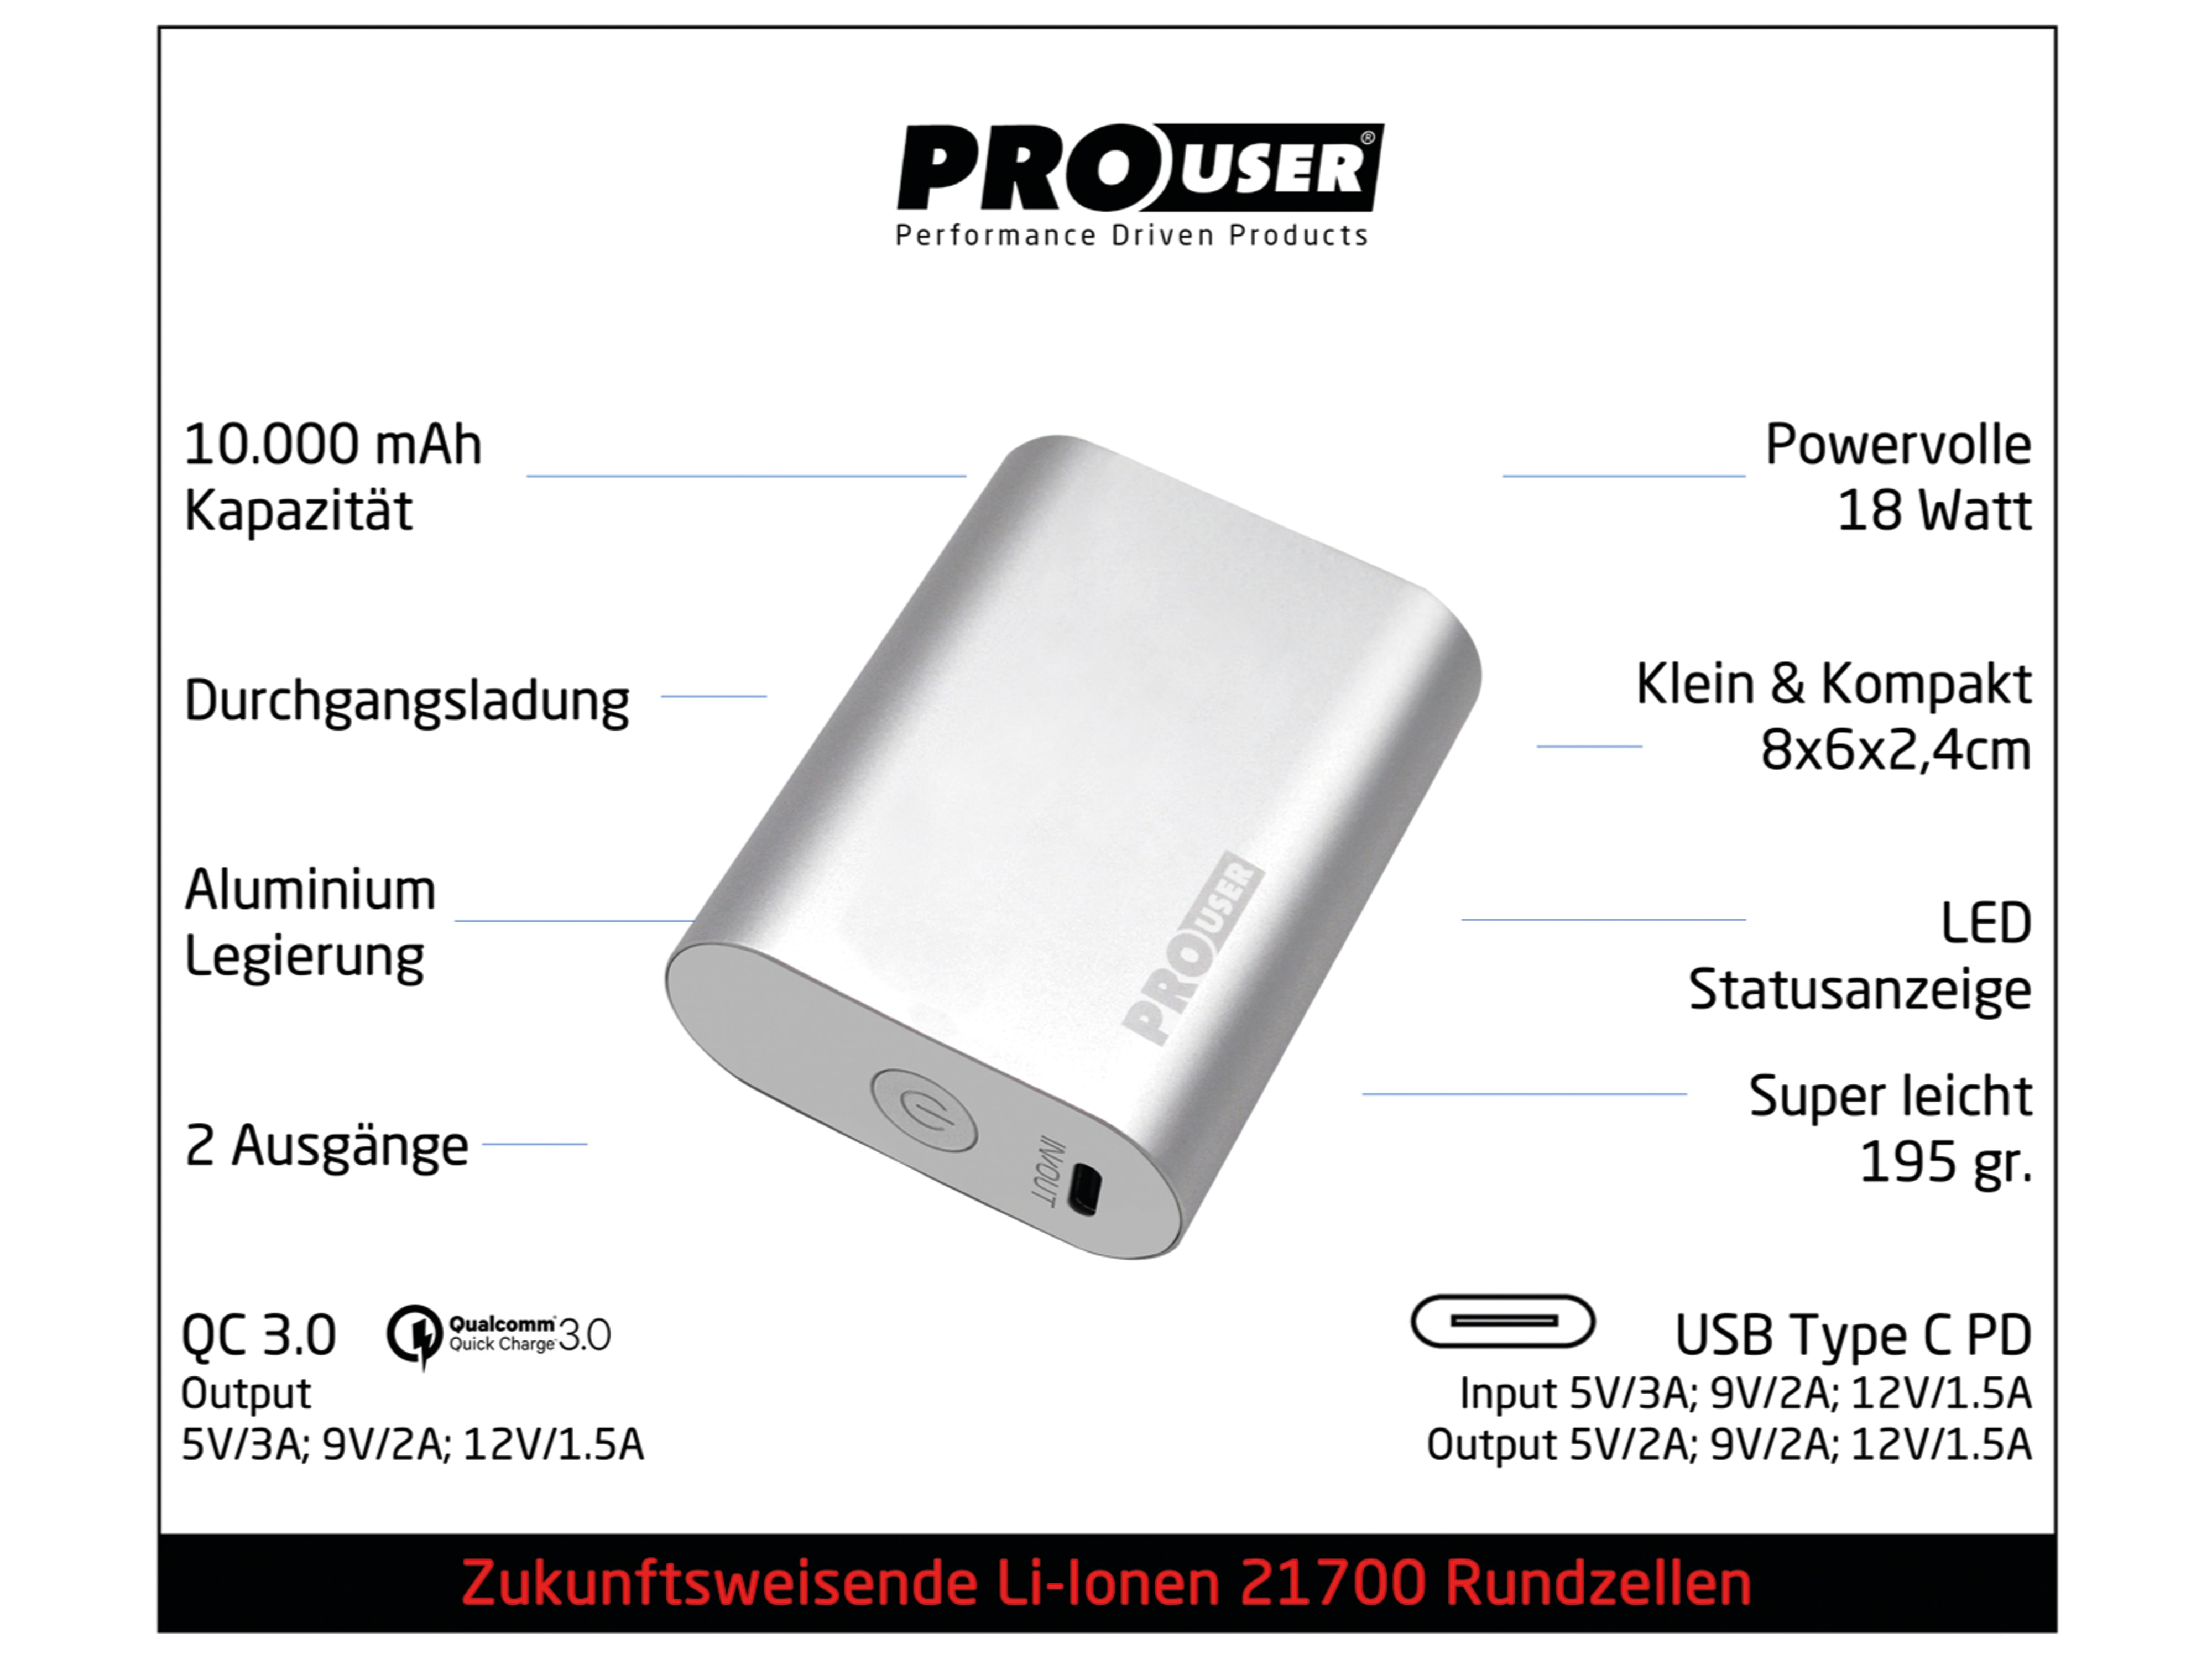 PROUSER USB Powerbank 20159, 10.000mAh, Li-Ionen, 21700 Cell, silber 